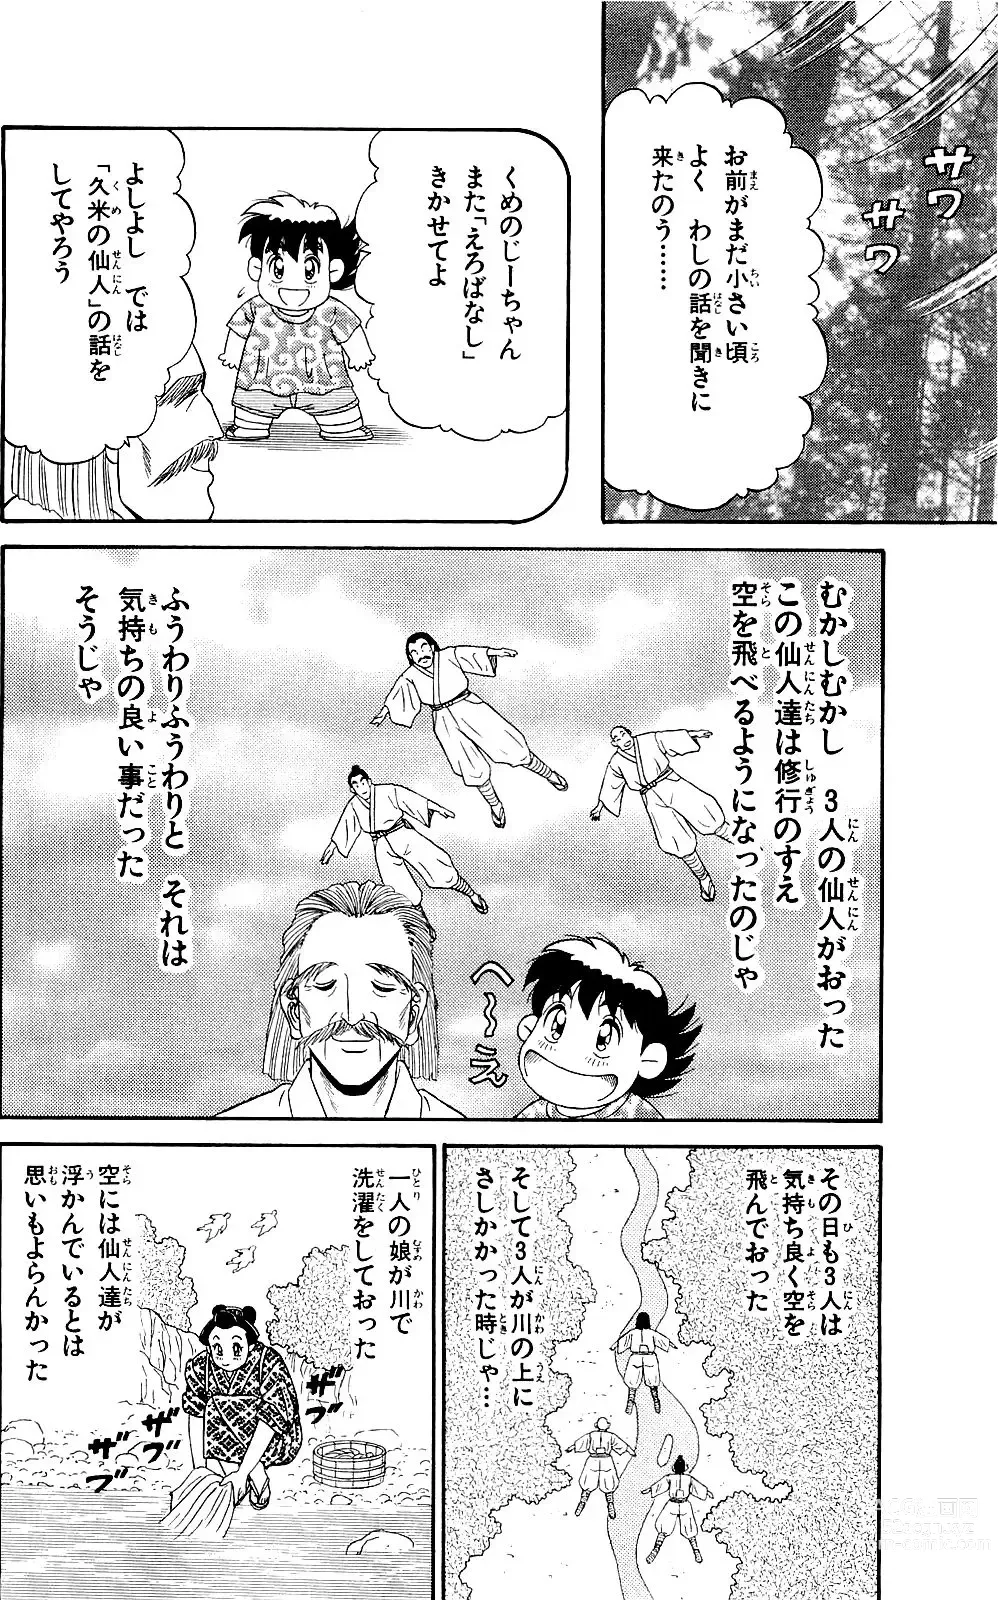 Page 184 of manga Orette Piyoritan 06